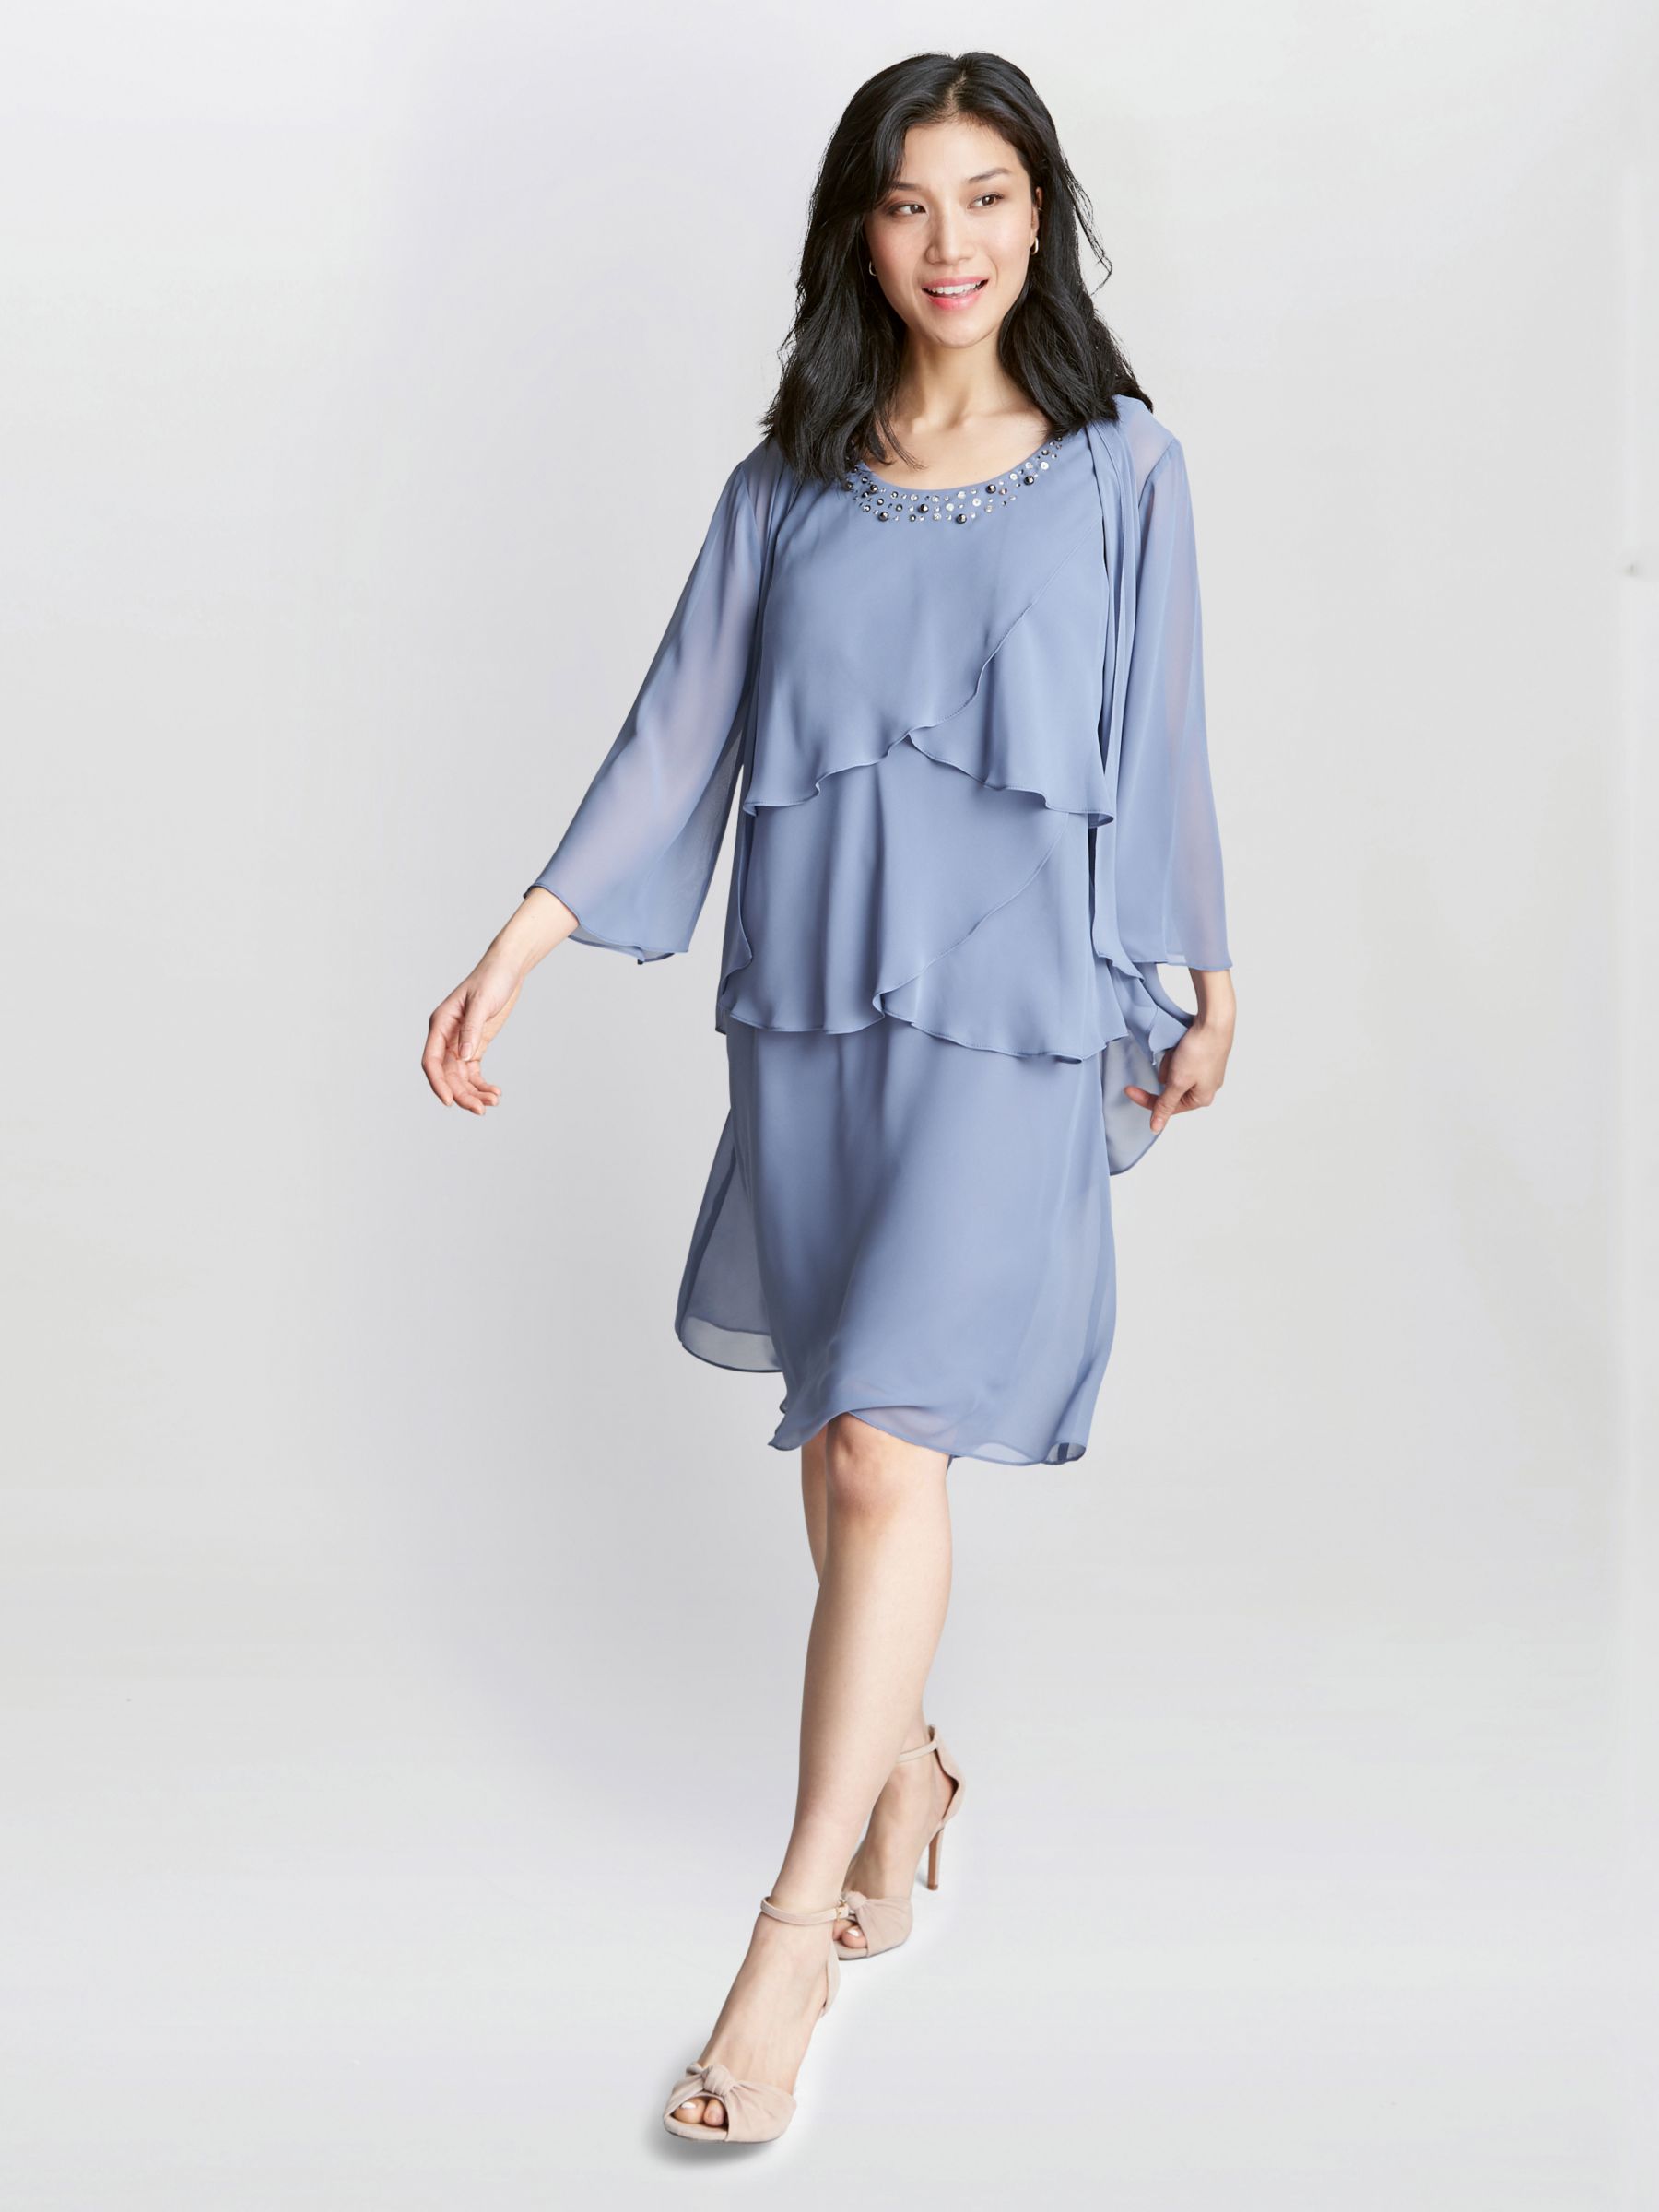 Gina Bacconi Lois Jacket and Embellished Dress, Perri, 10